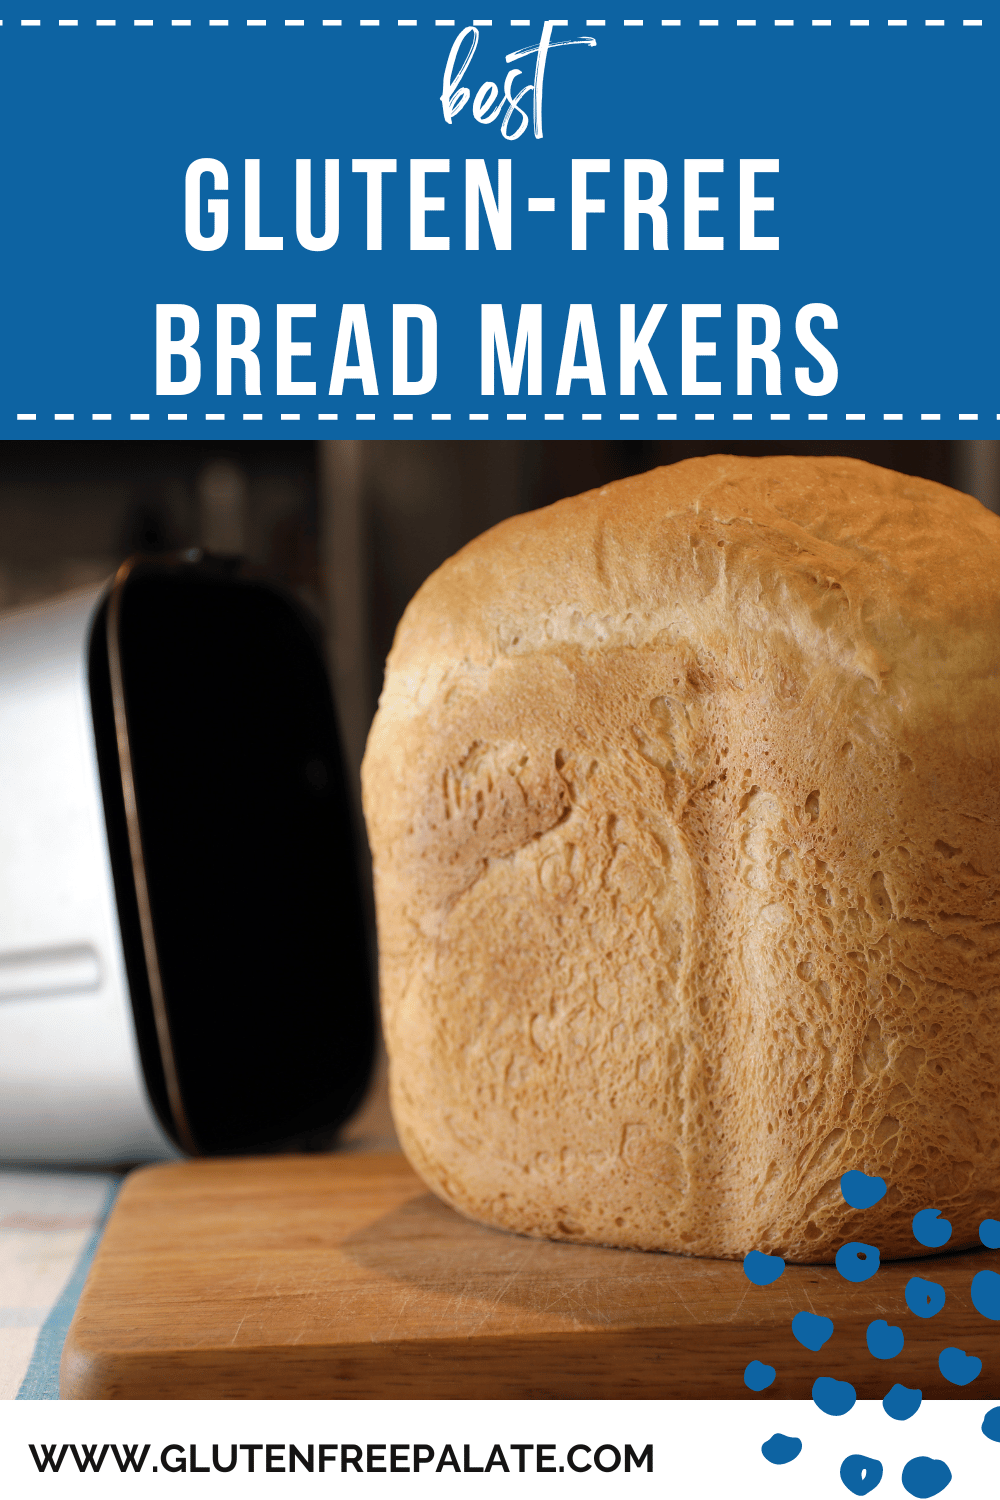 Hamilton Beach Dough and Bread Maker: Pros and Cons for Gluten